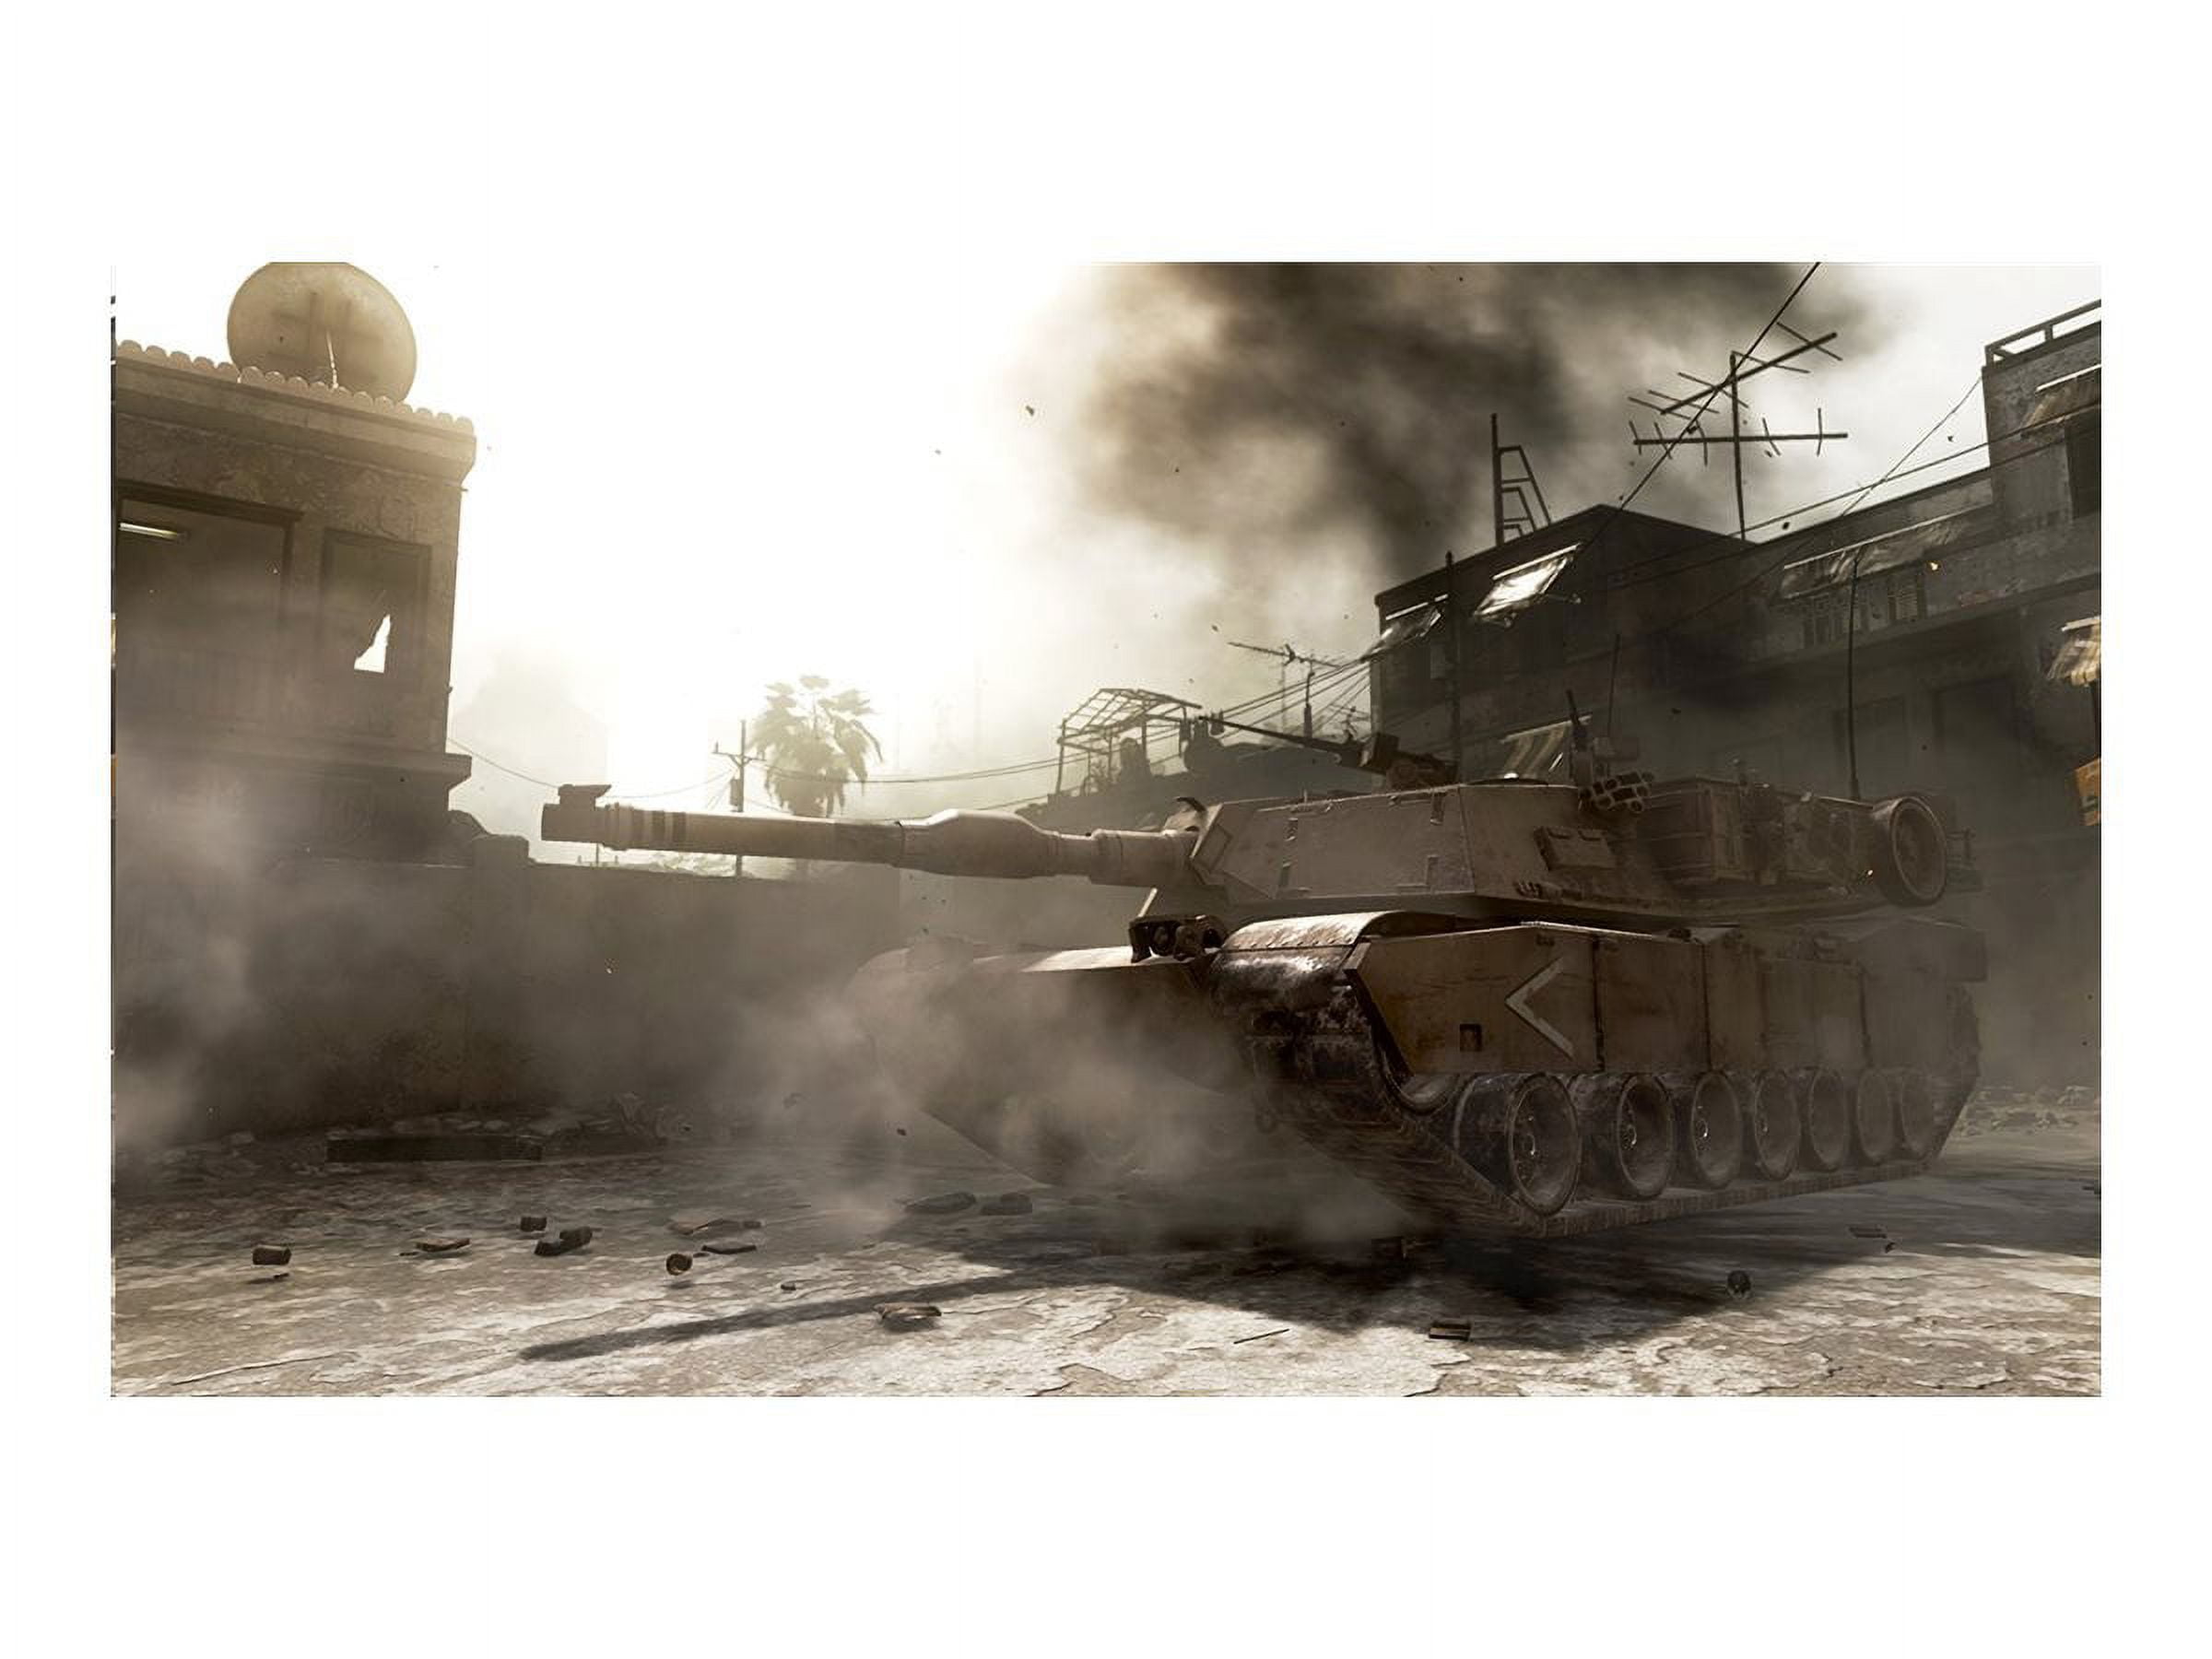 Call of Duty Modern Warfare Remastered Playstation 4 PS4 PS5 - Free  Shipping! 47875880740